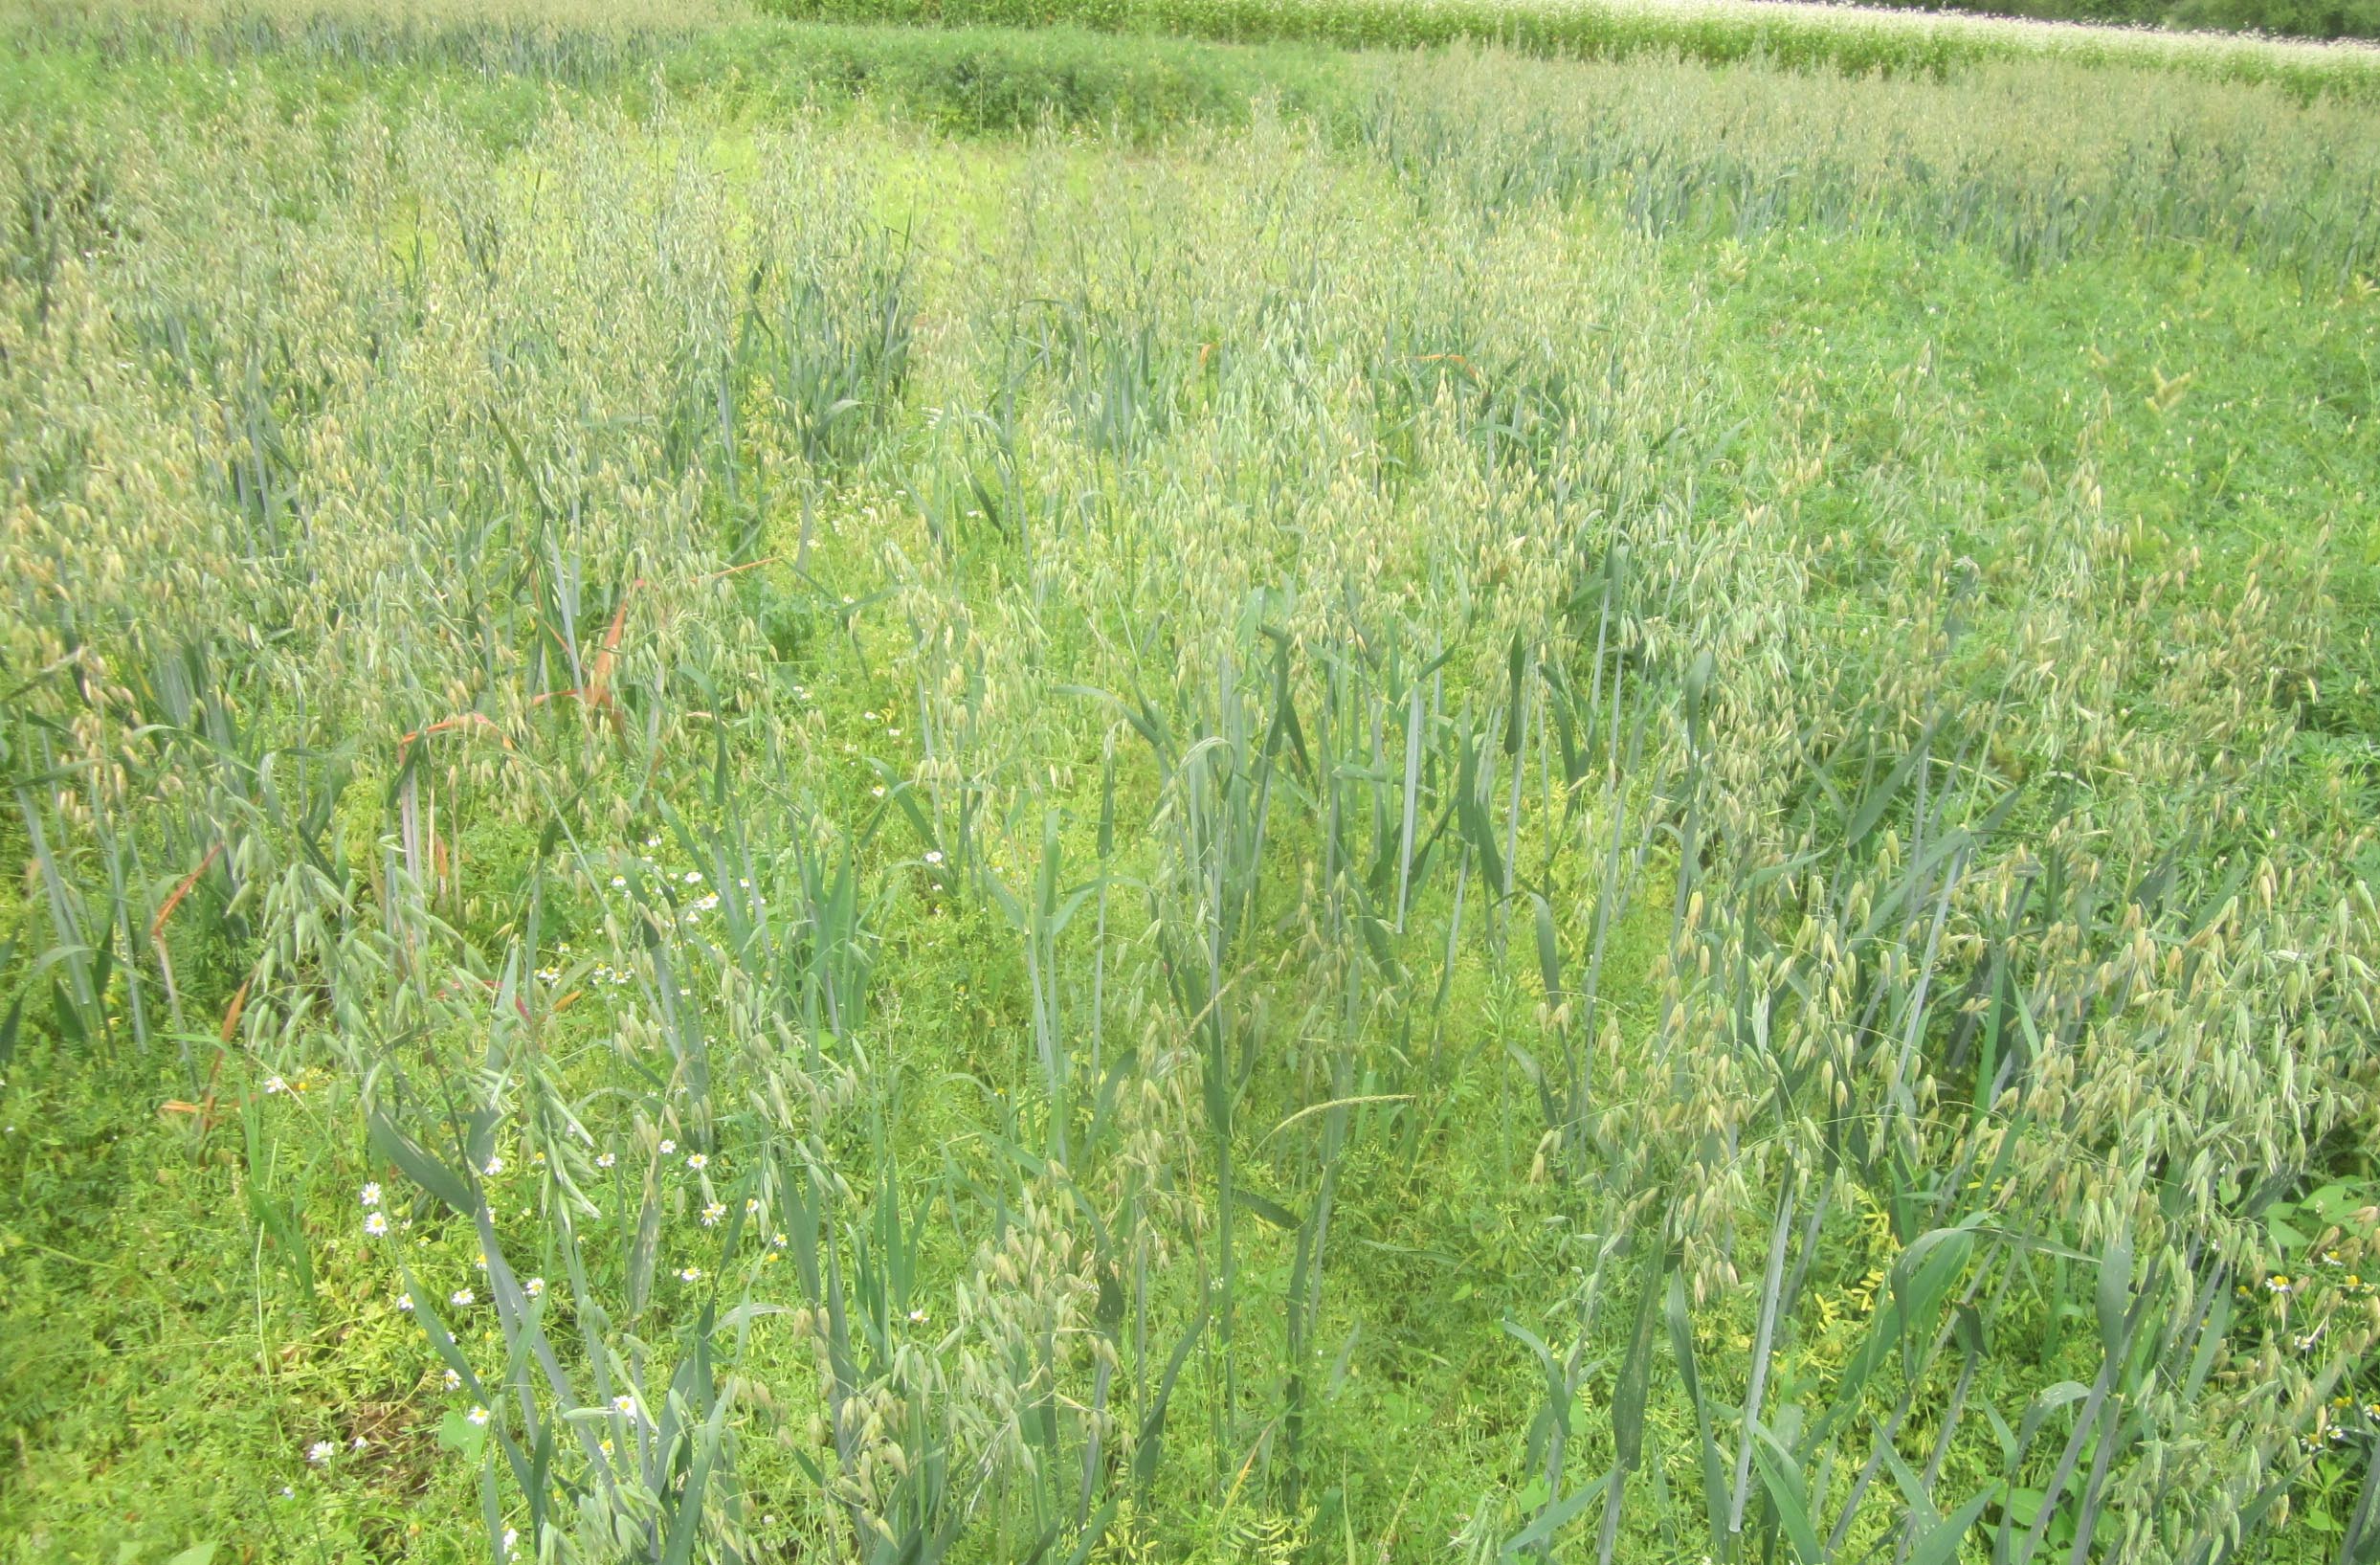 The photo shows a green field full of light lentil plants.  Darker oats grow between them.